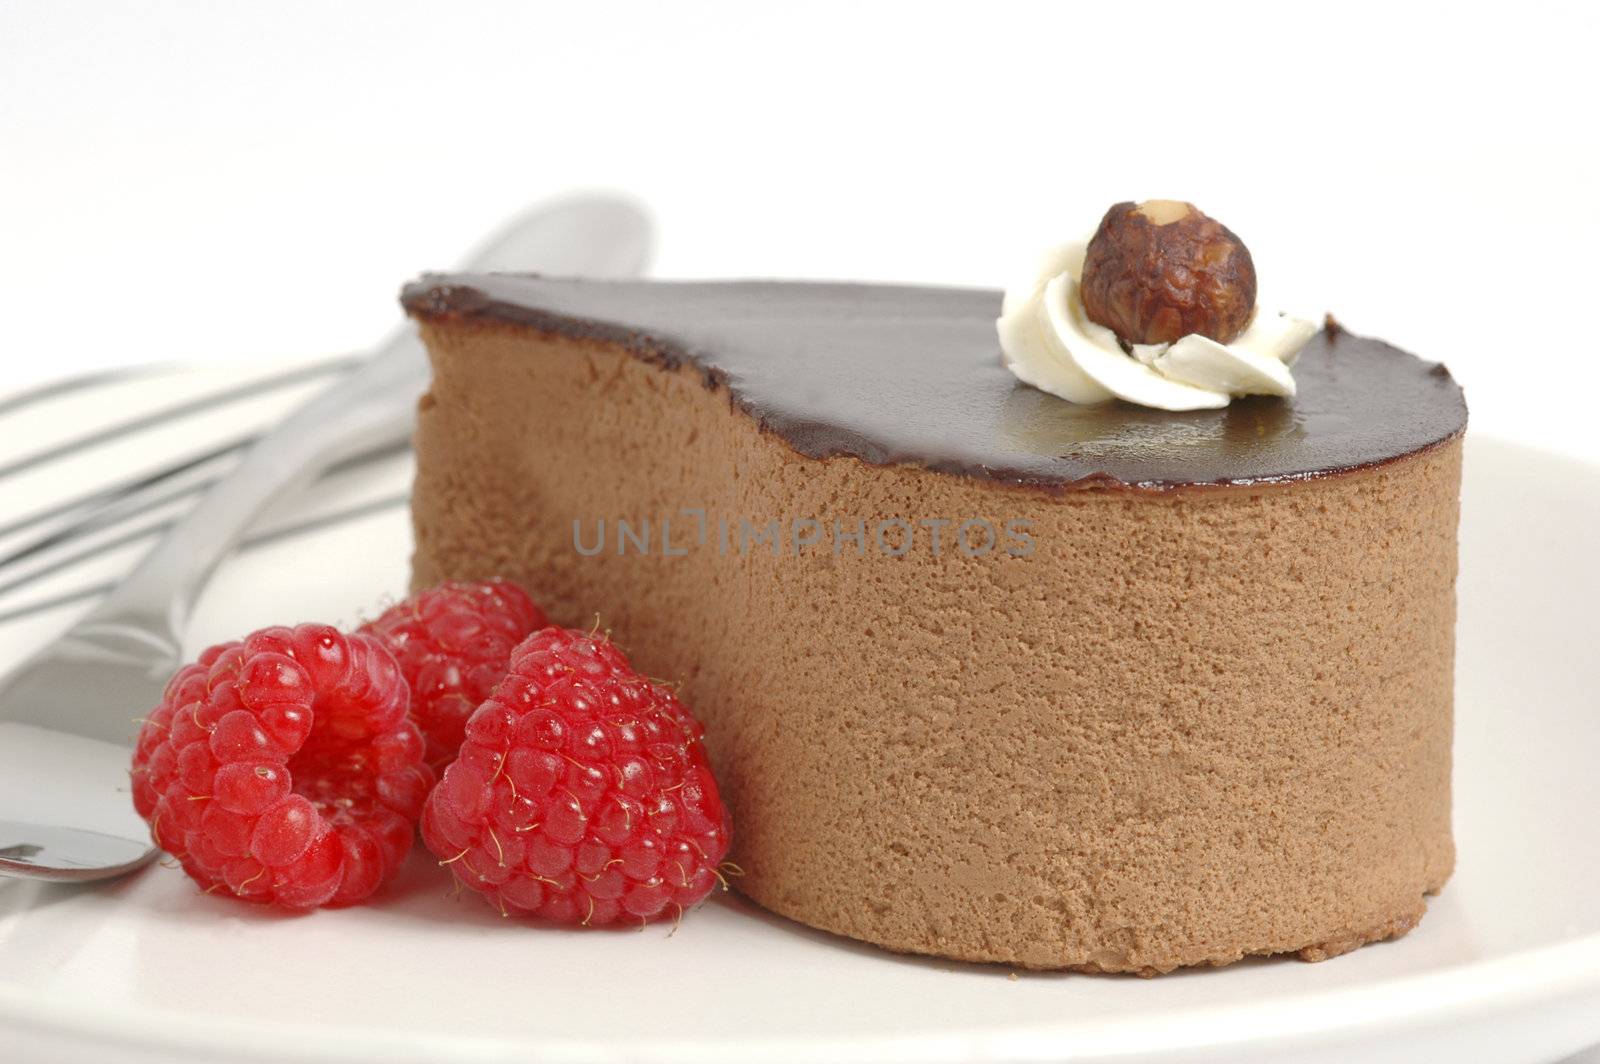 Chocolate Dessert by billberryphotography